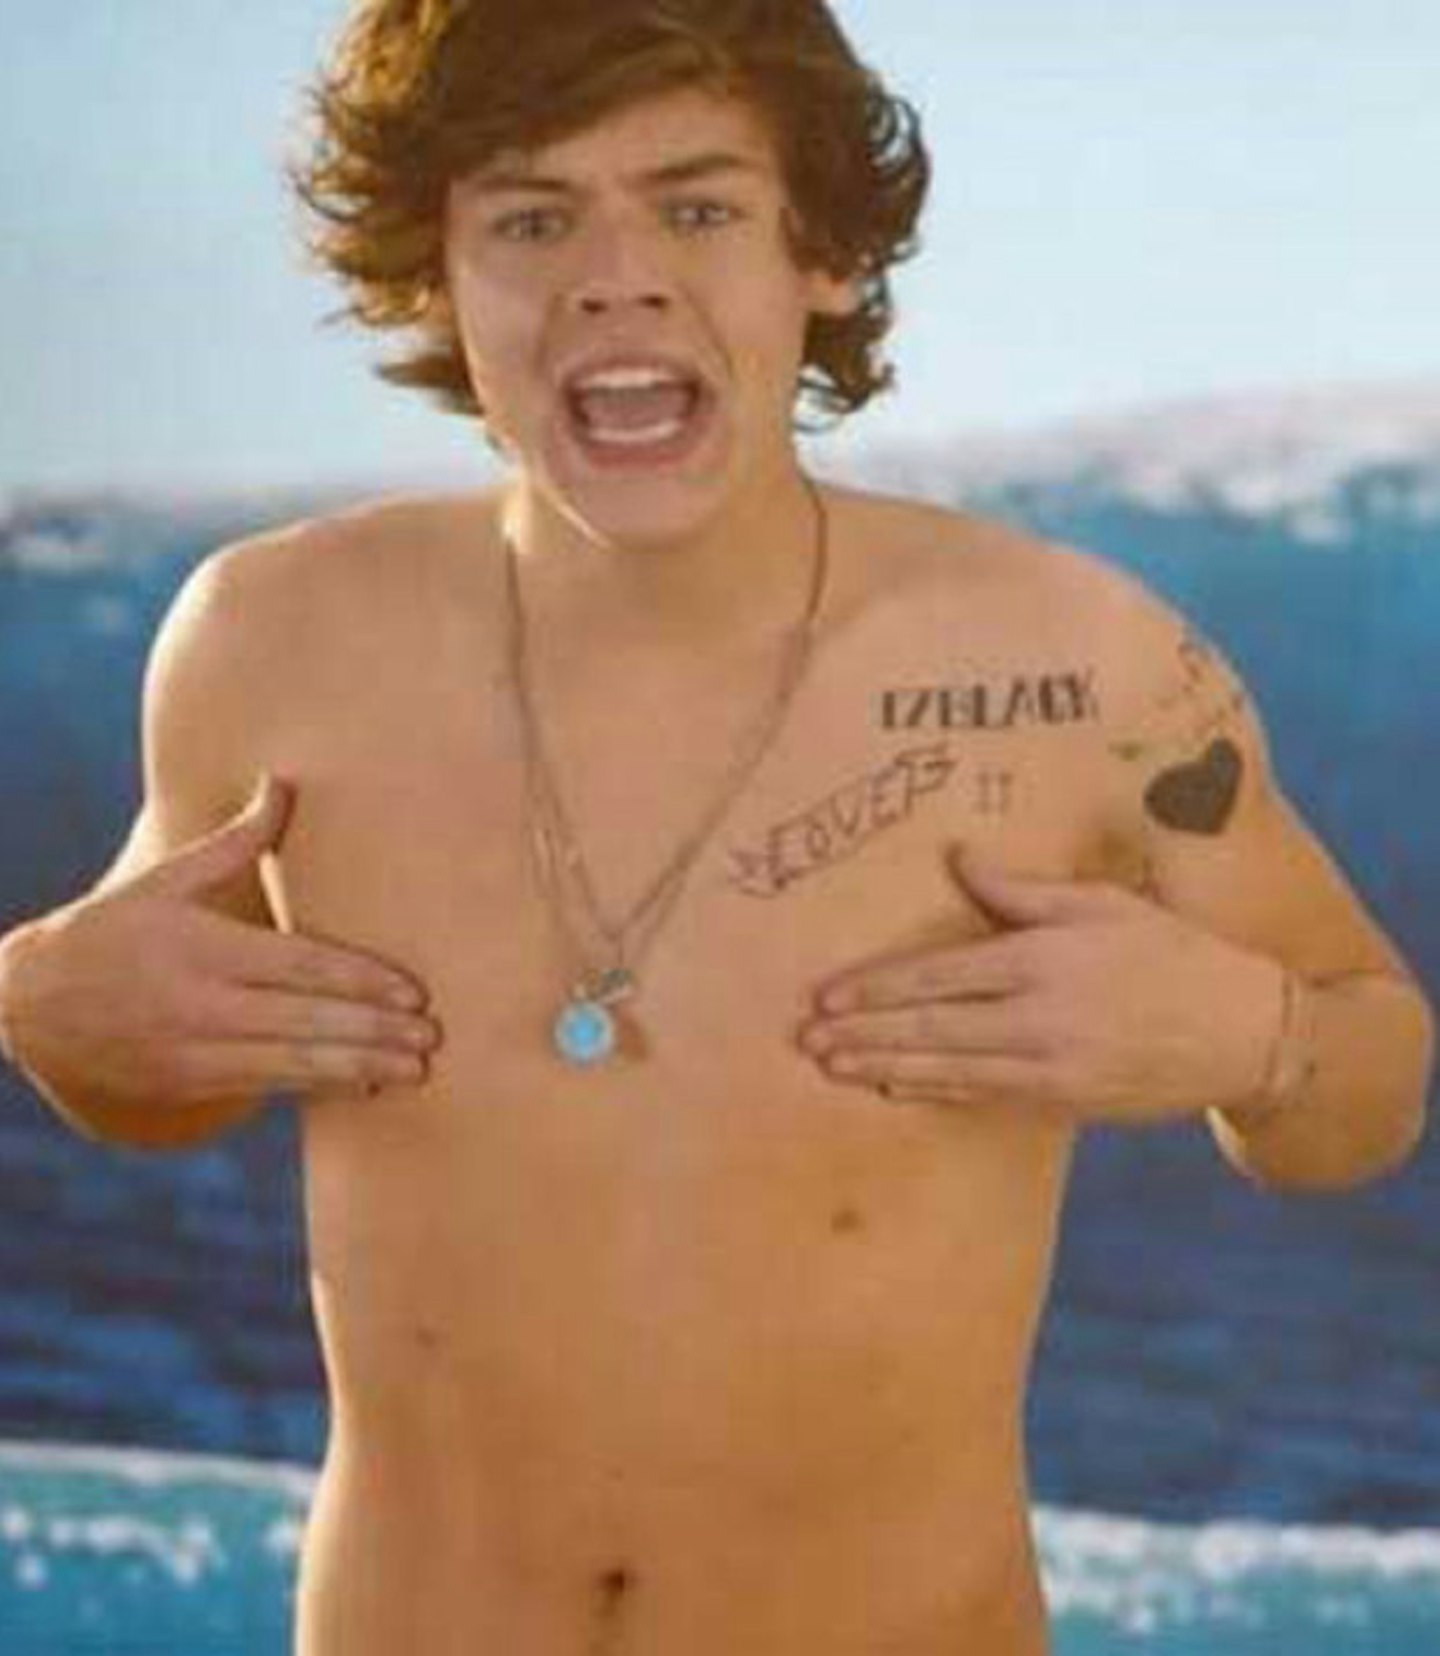 Harry Styles' fourth nipple as celebs like Lily Allen celebrate